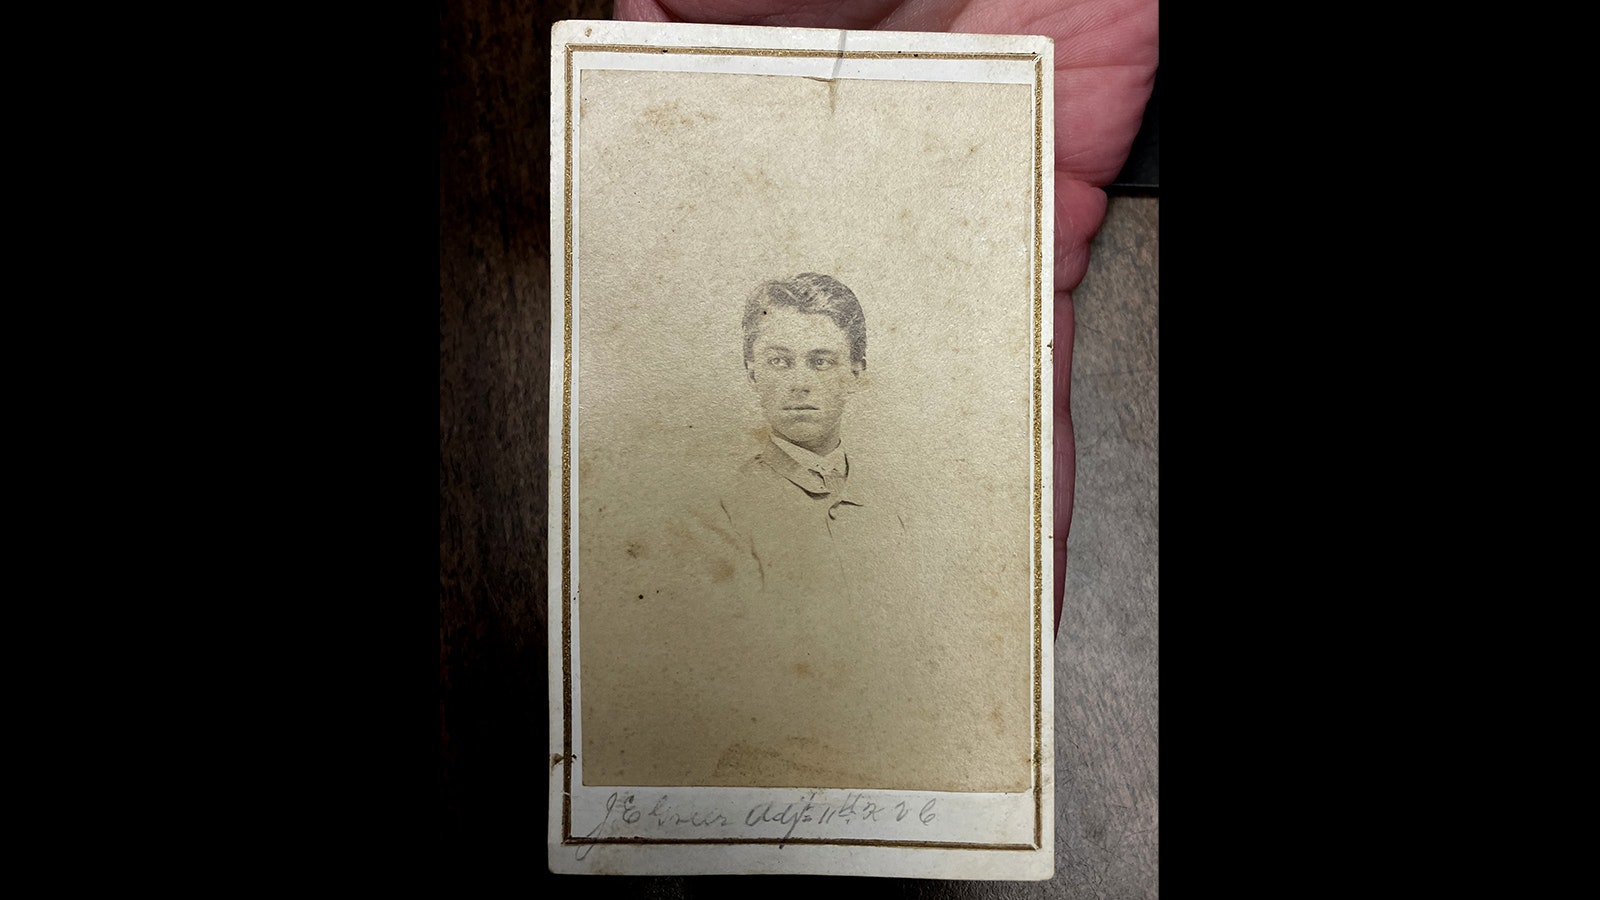 Casper historian Johanna Wickman estimates this photo of James Greer, a U.S. Cavalry officer, was taken in 1863. He likely had few photos taken.